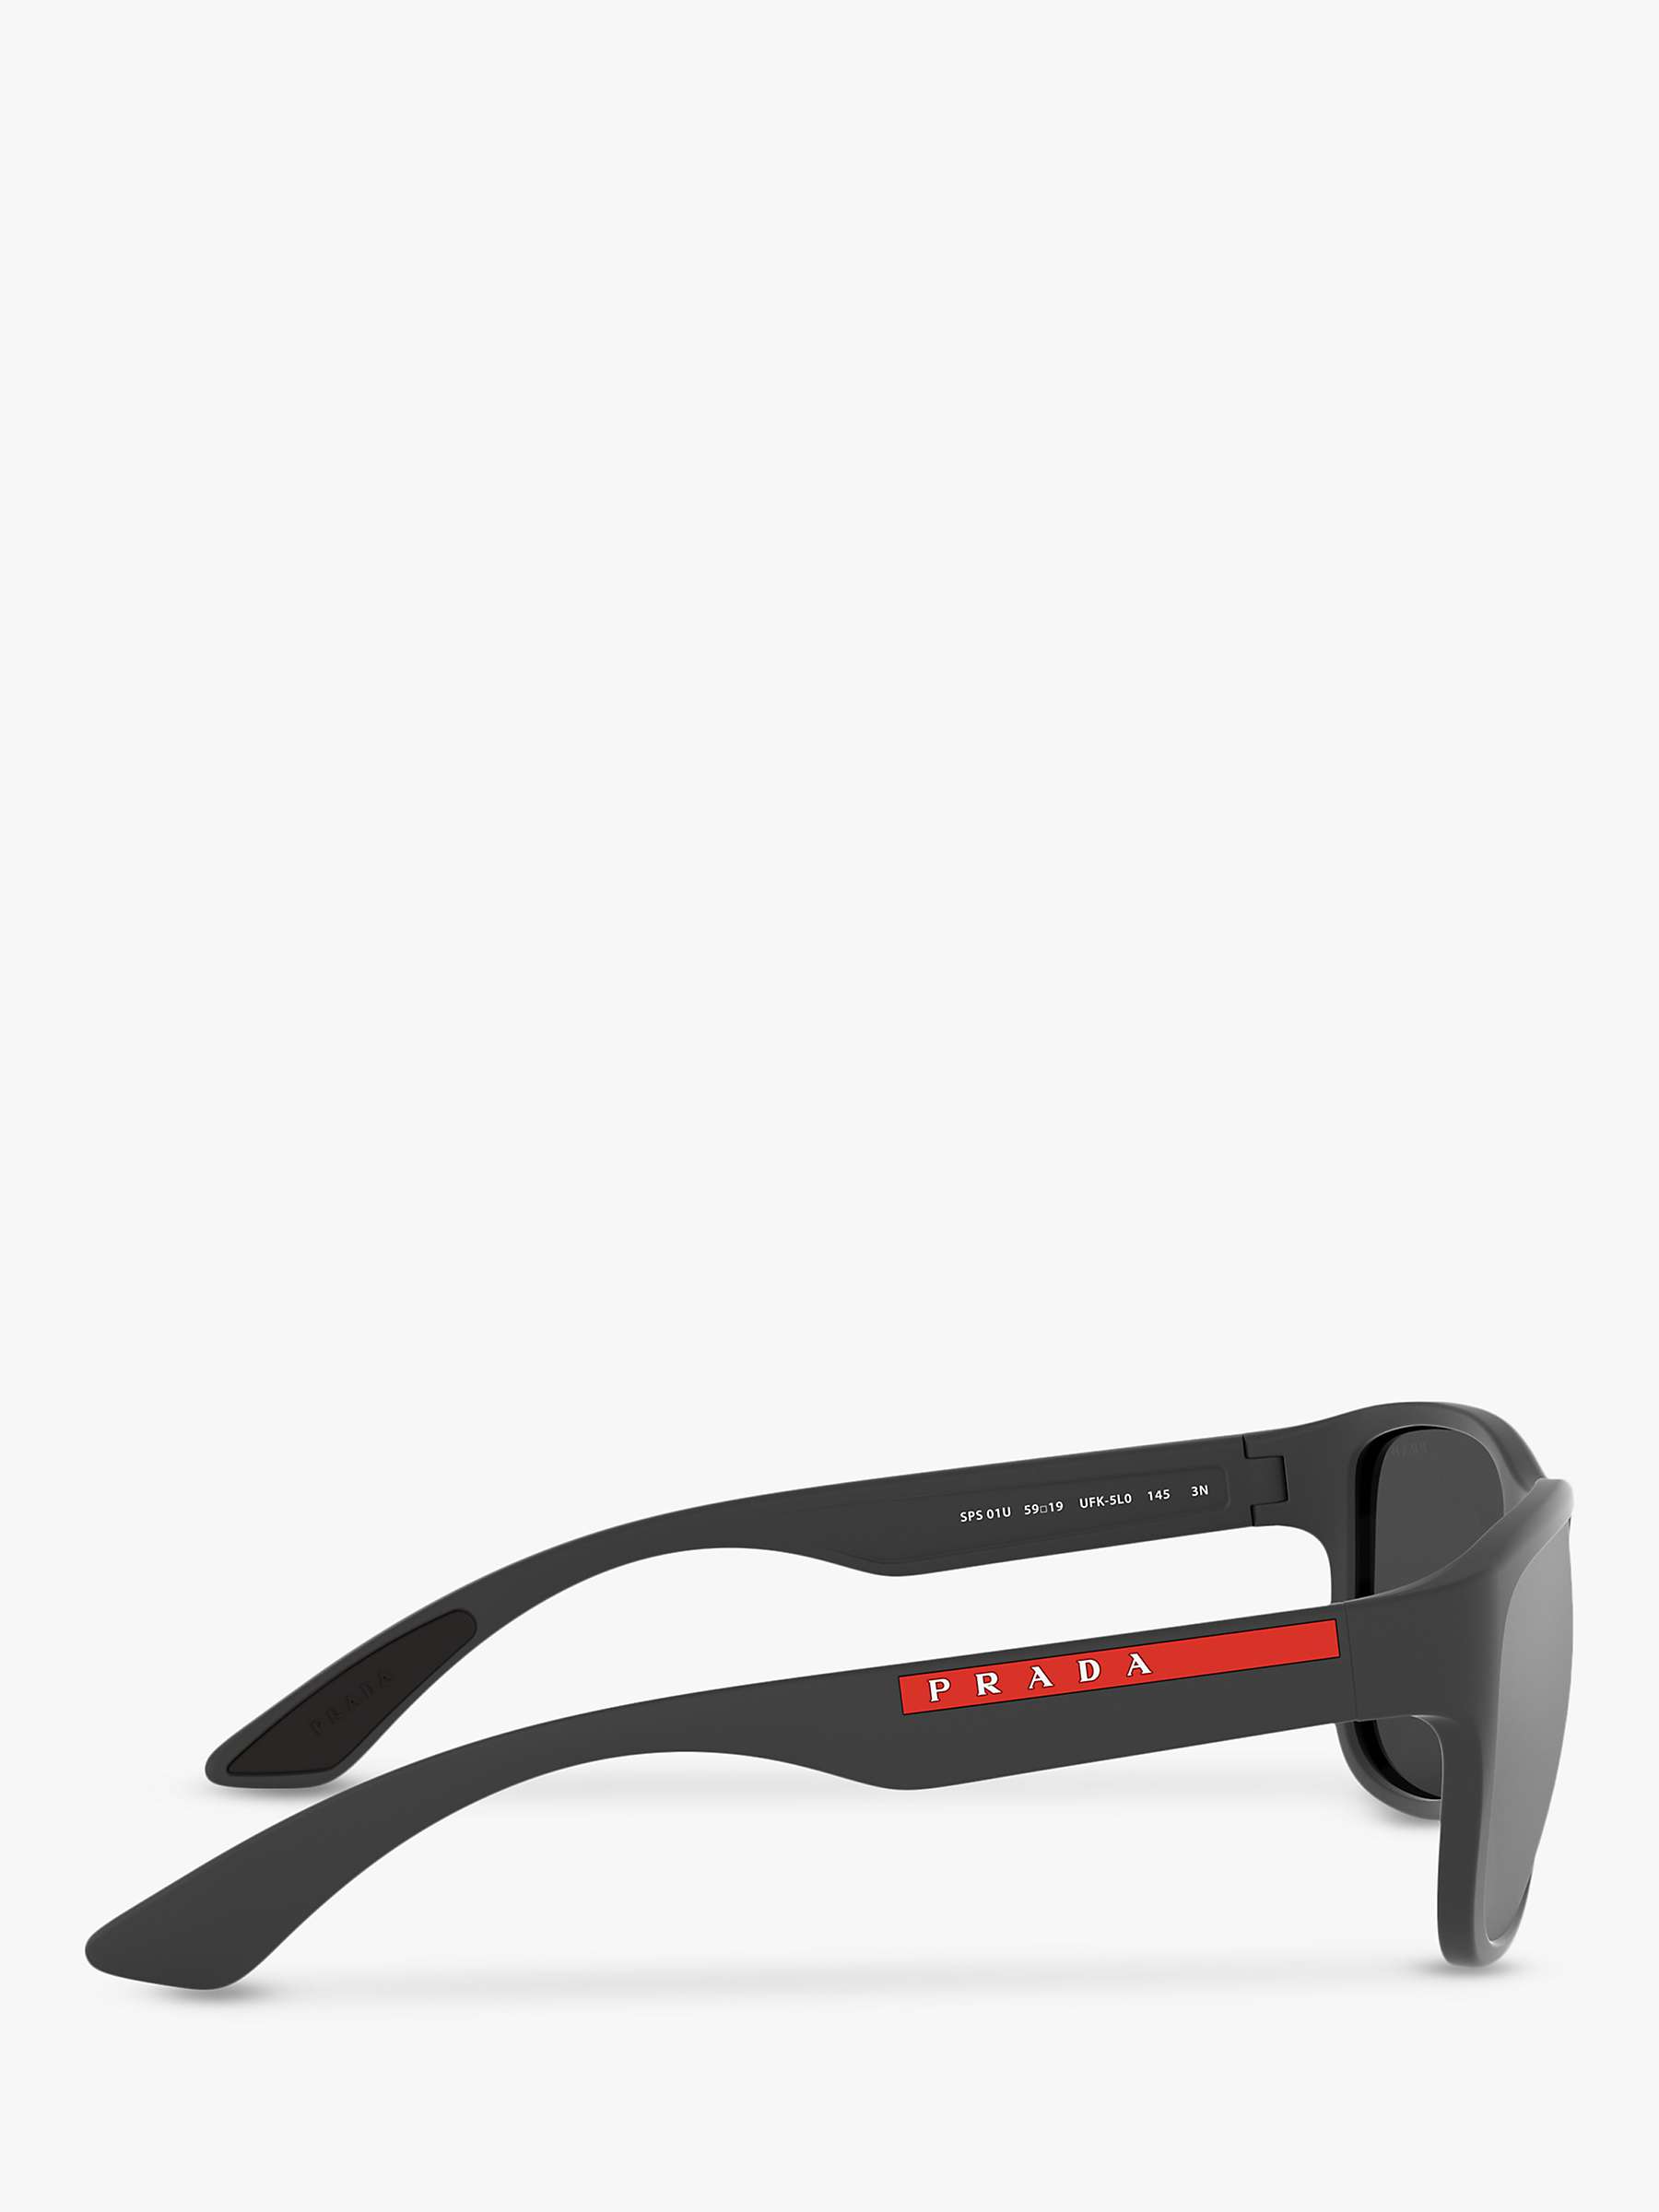 Buy Prada PS 01US Men's Rectangular Sunglasses Online at johnlewis.com